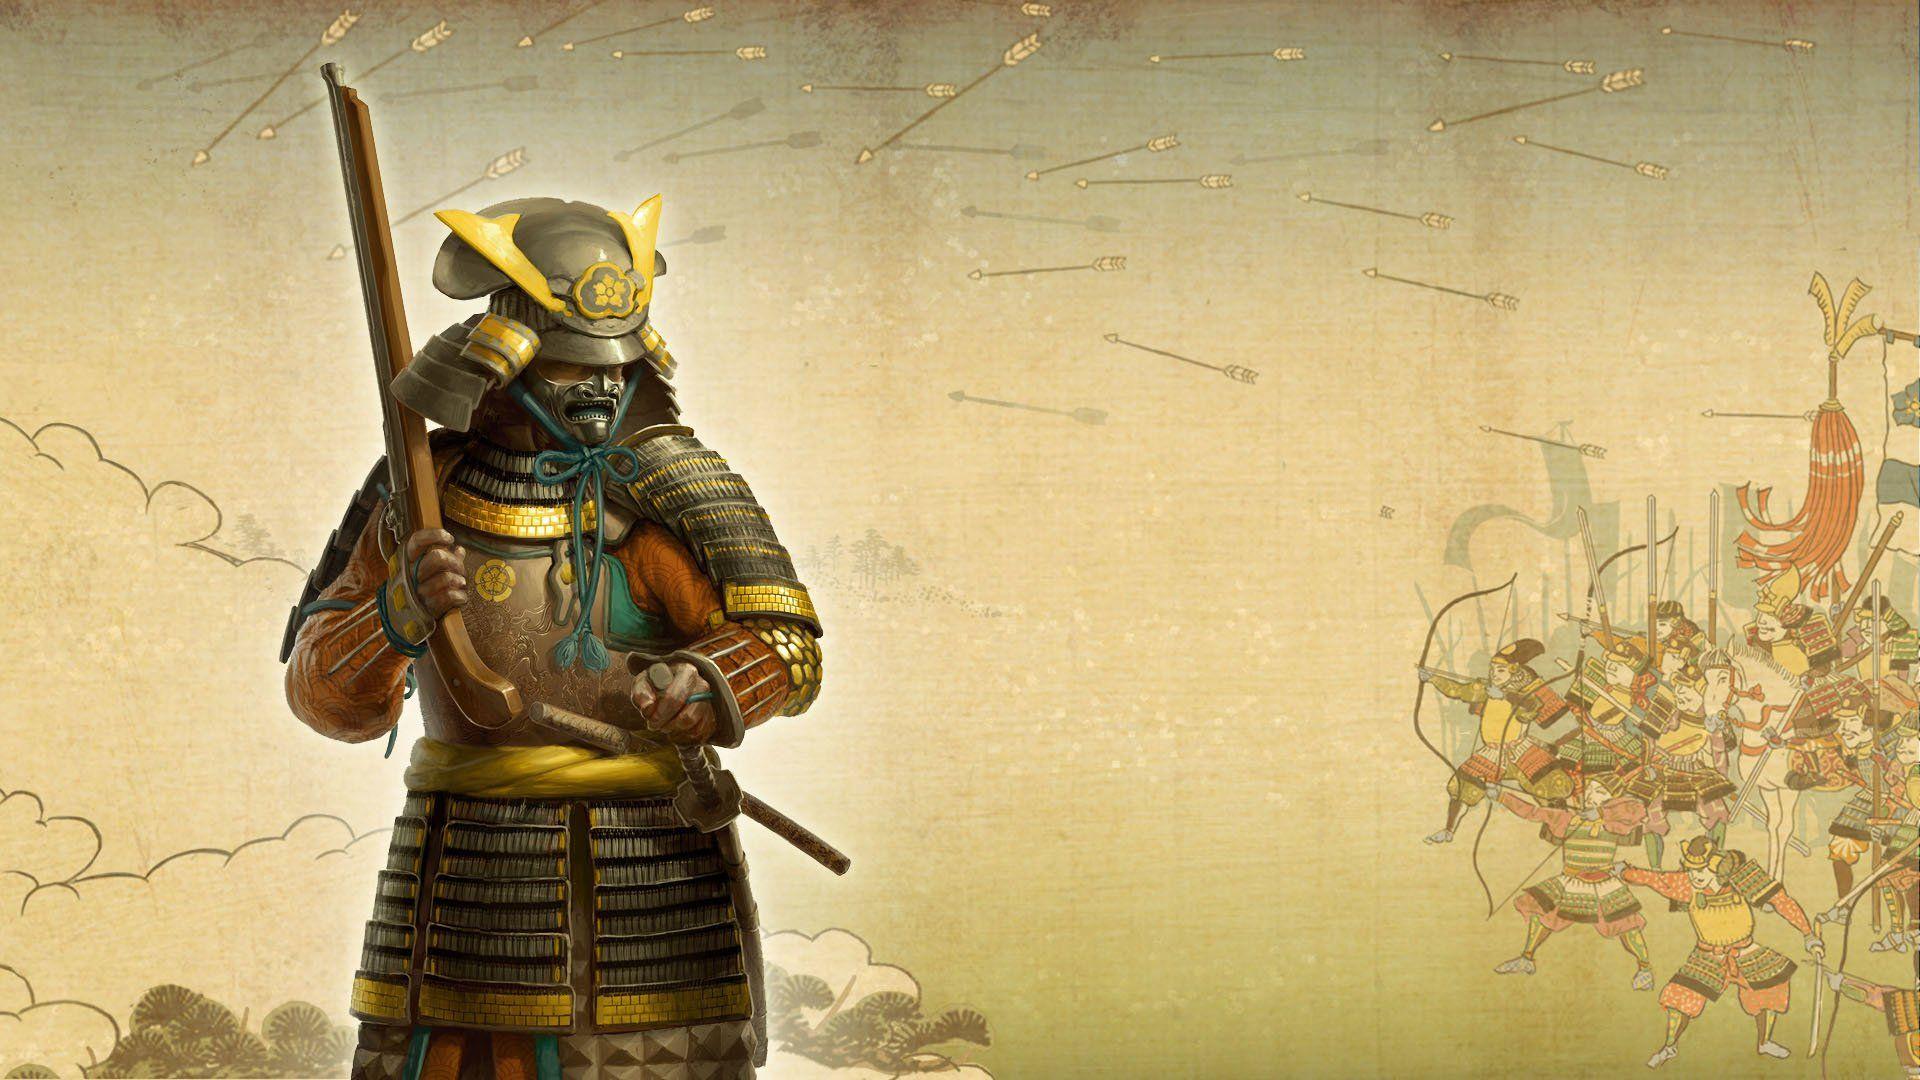 Raiden Shogun Wallpapers  Top 30 Best Raiden Shogun Backgrounds Download